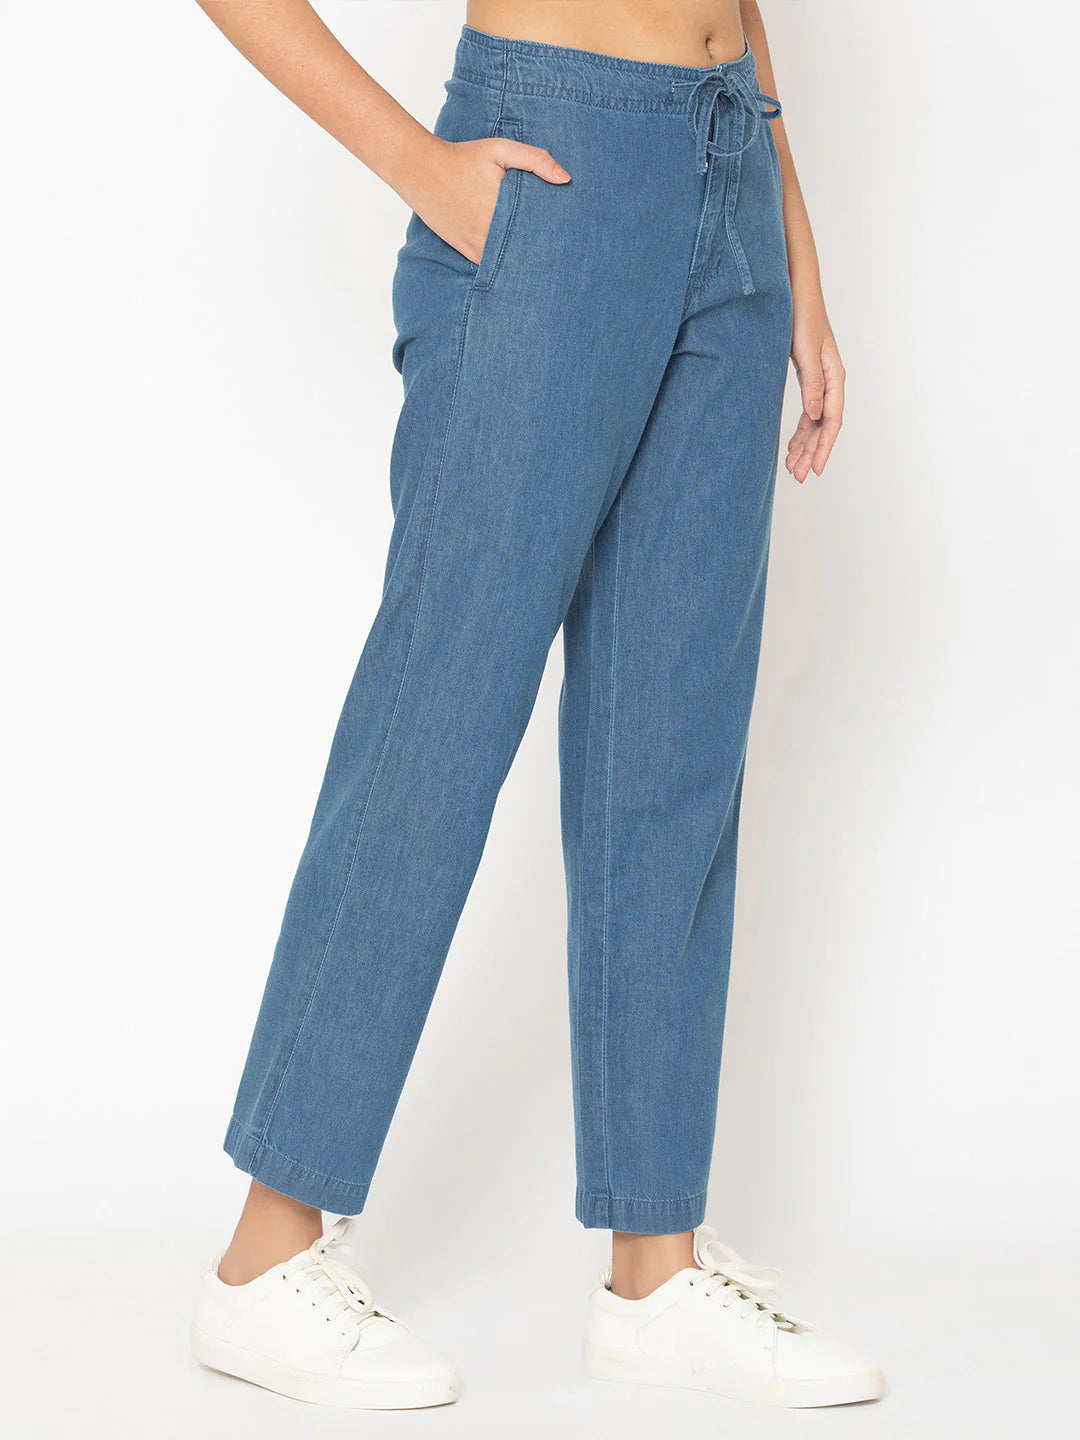 Medium Rise Jeans for Women | Everyday Comfort Medium Rise Jeans